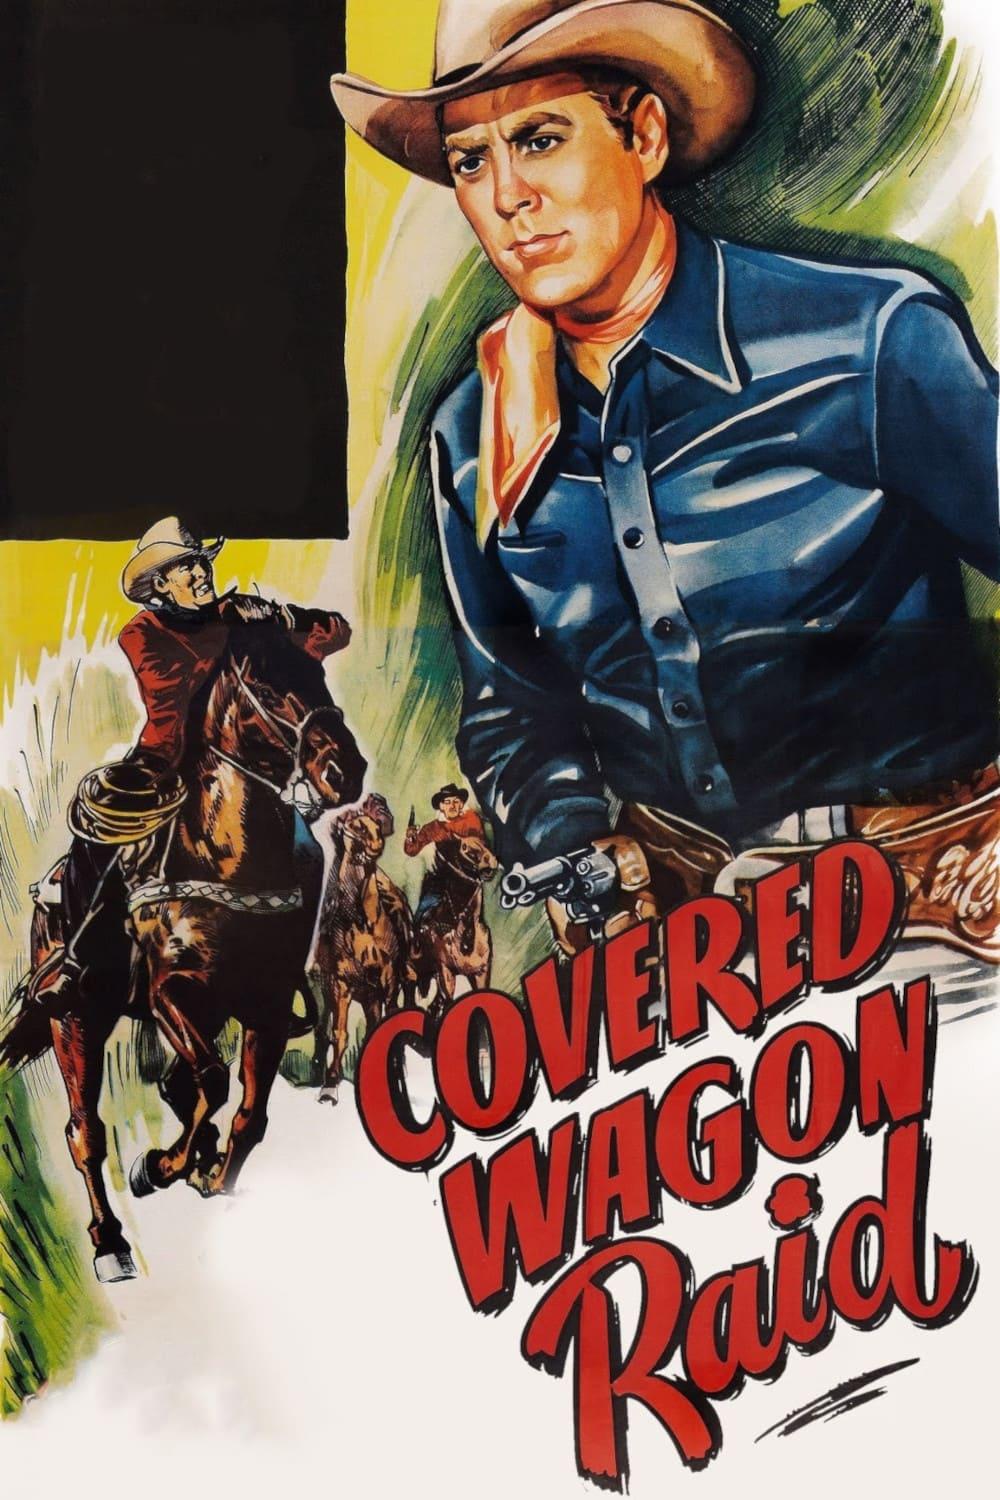 Covered Wagon Raid poster